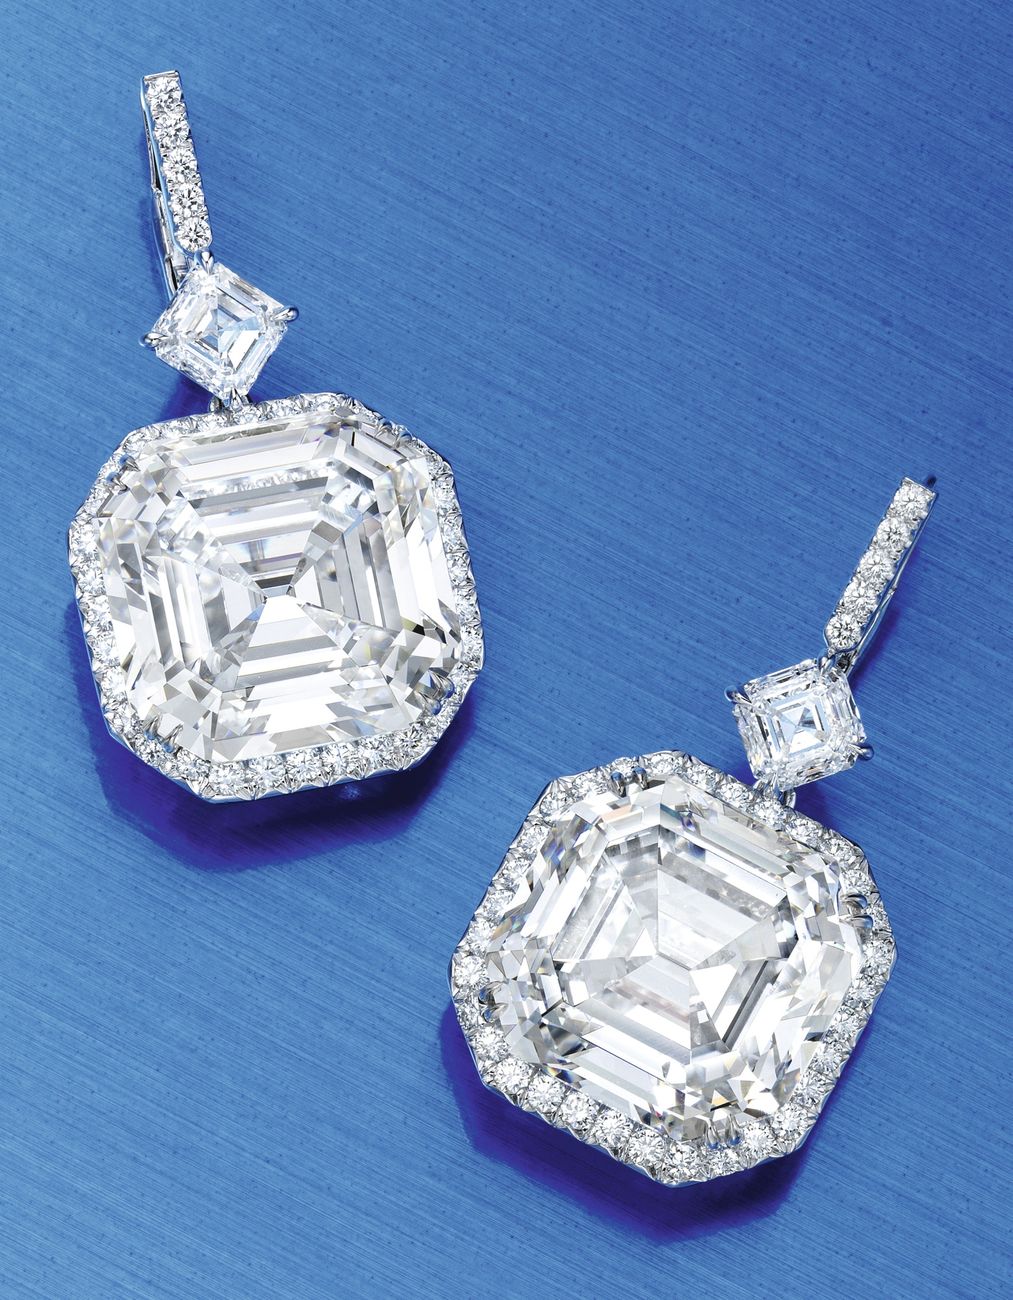 Lot 82 - Extraordinary Pair of Platinum and Diamond Earrings